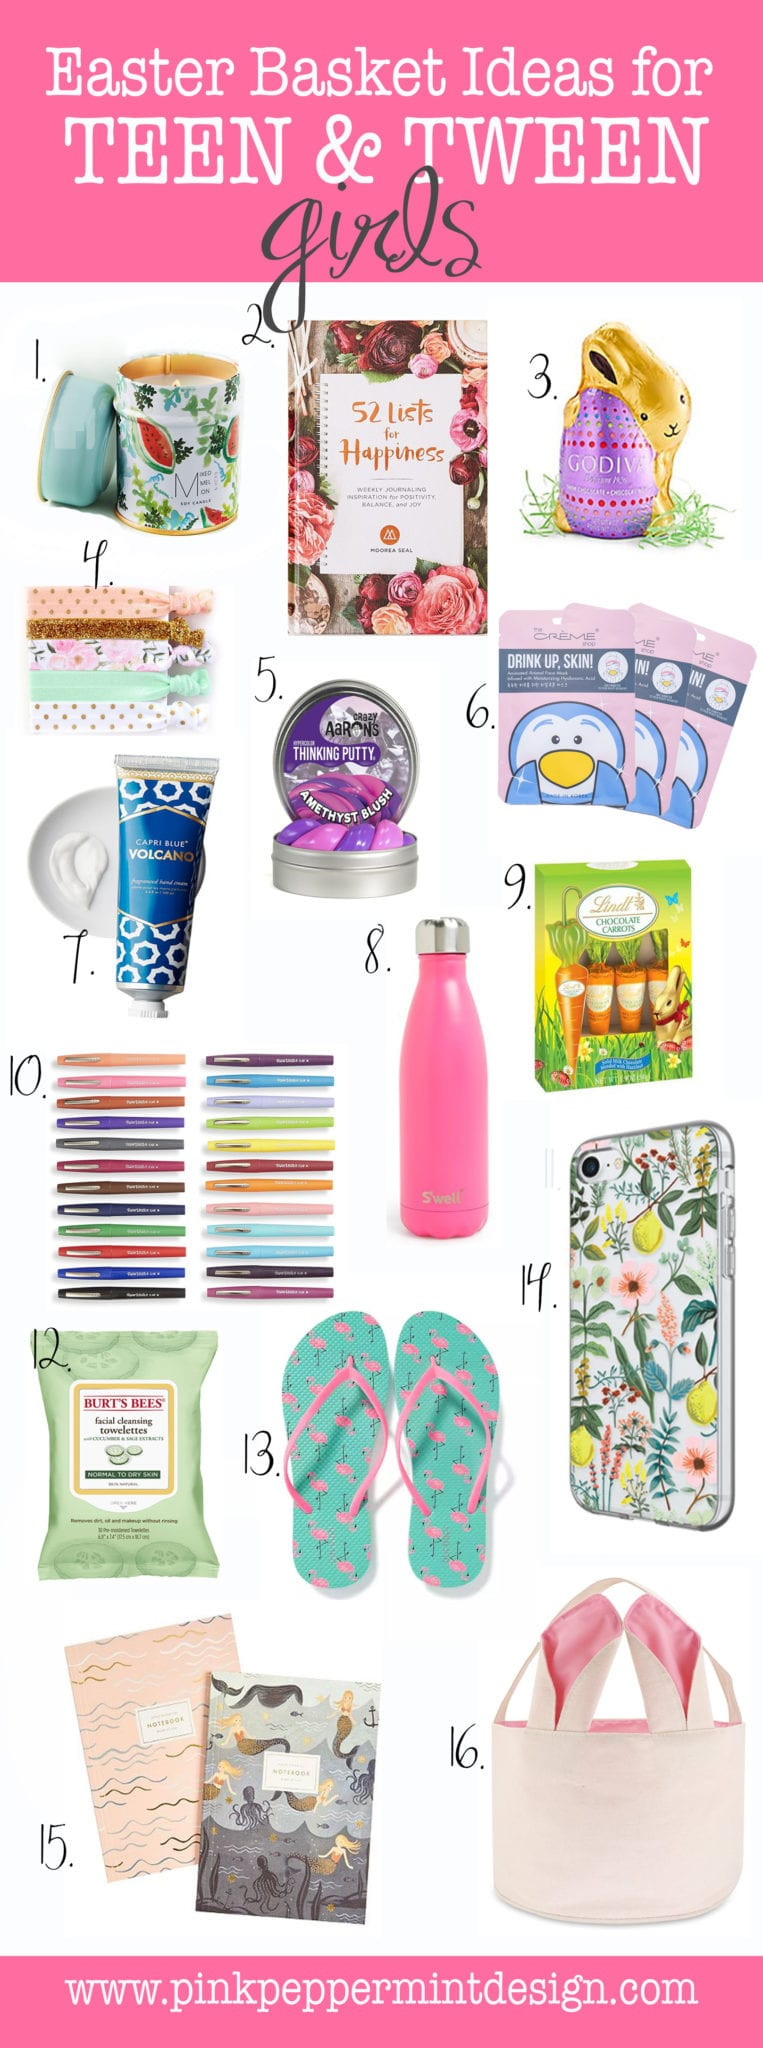 Tween Girls Gift Ideas
 Best Easter Basket Gift Ideas for Tween & Teenage Girls